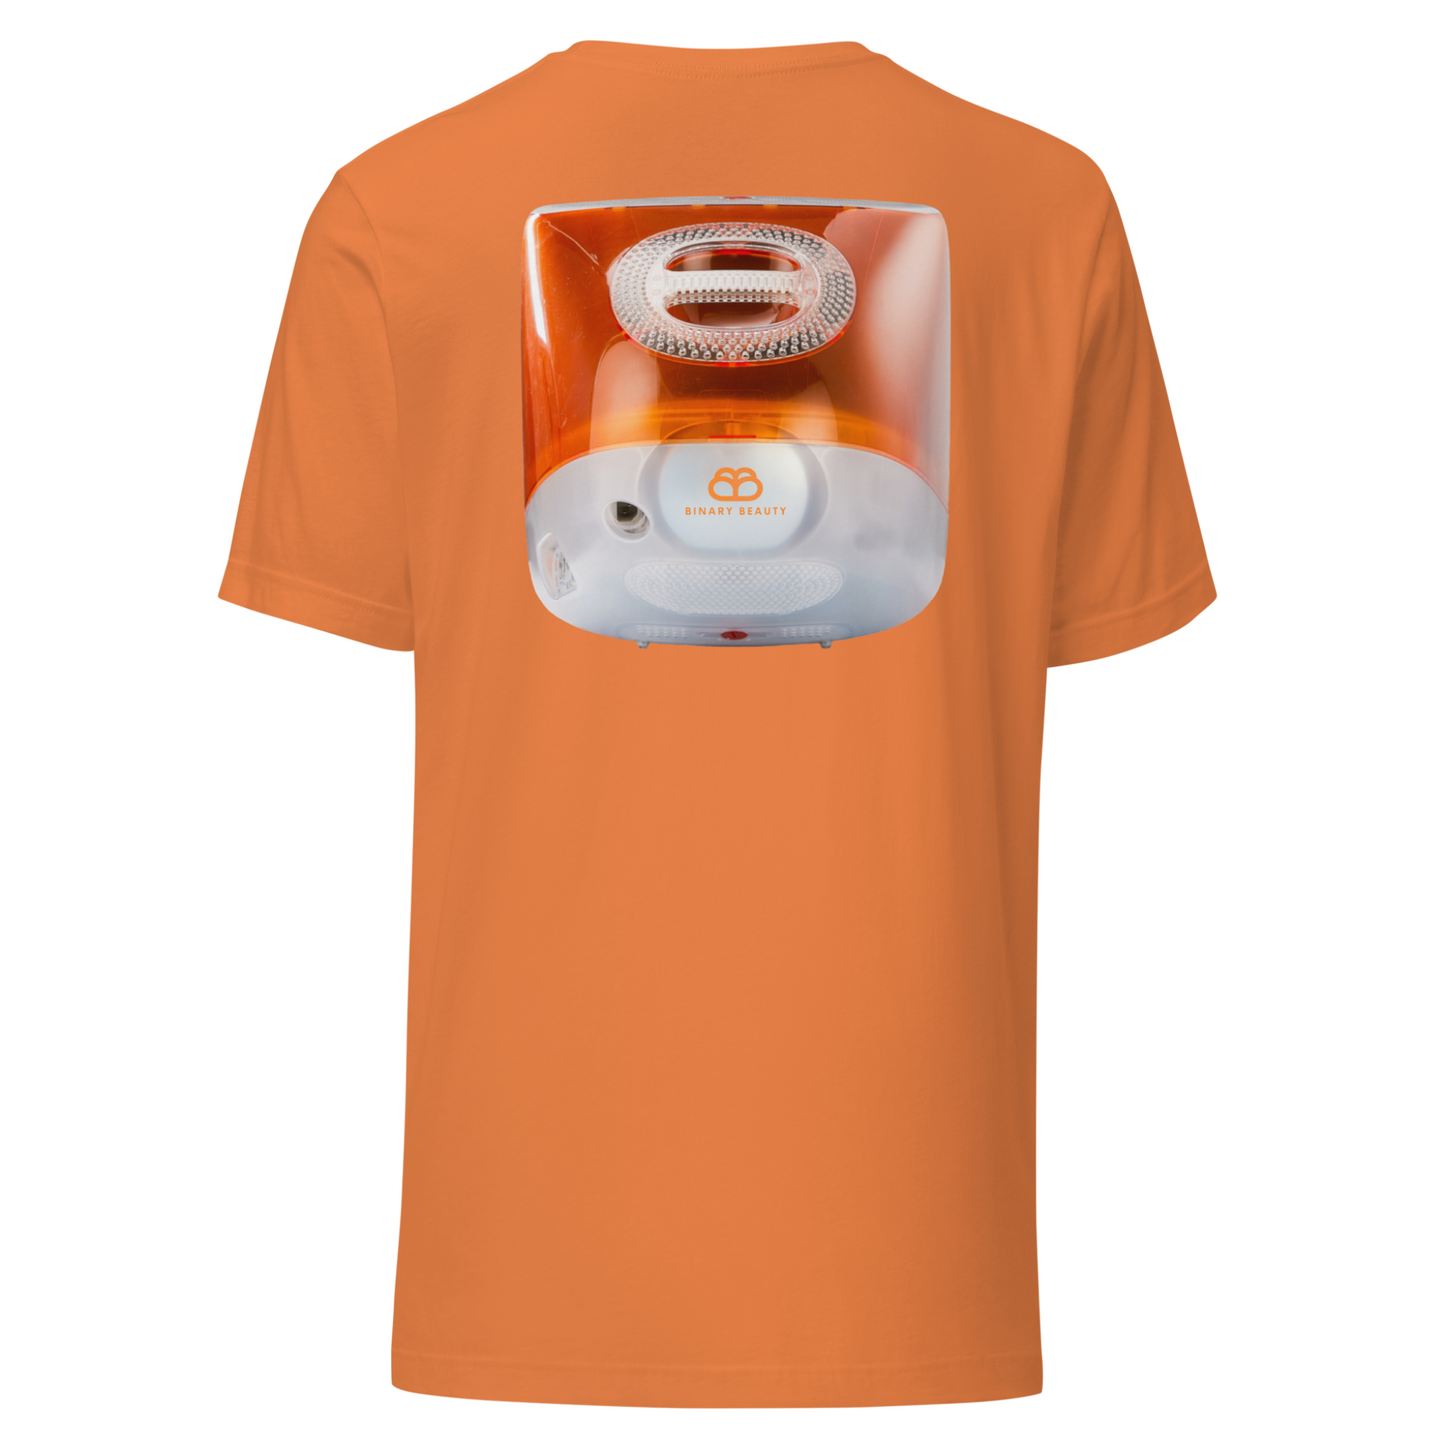 iCandy Softwear Shirt in Tangerine